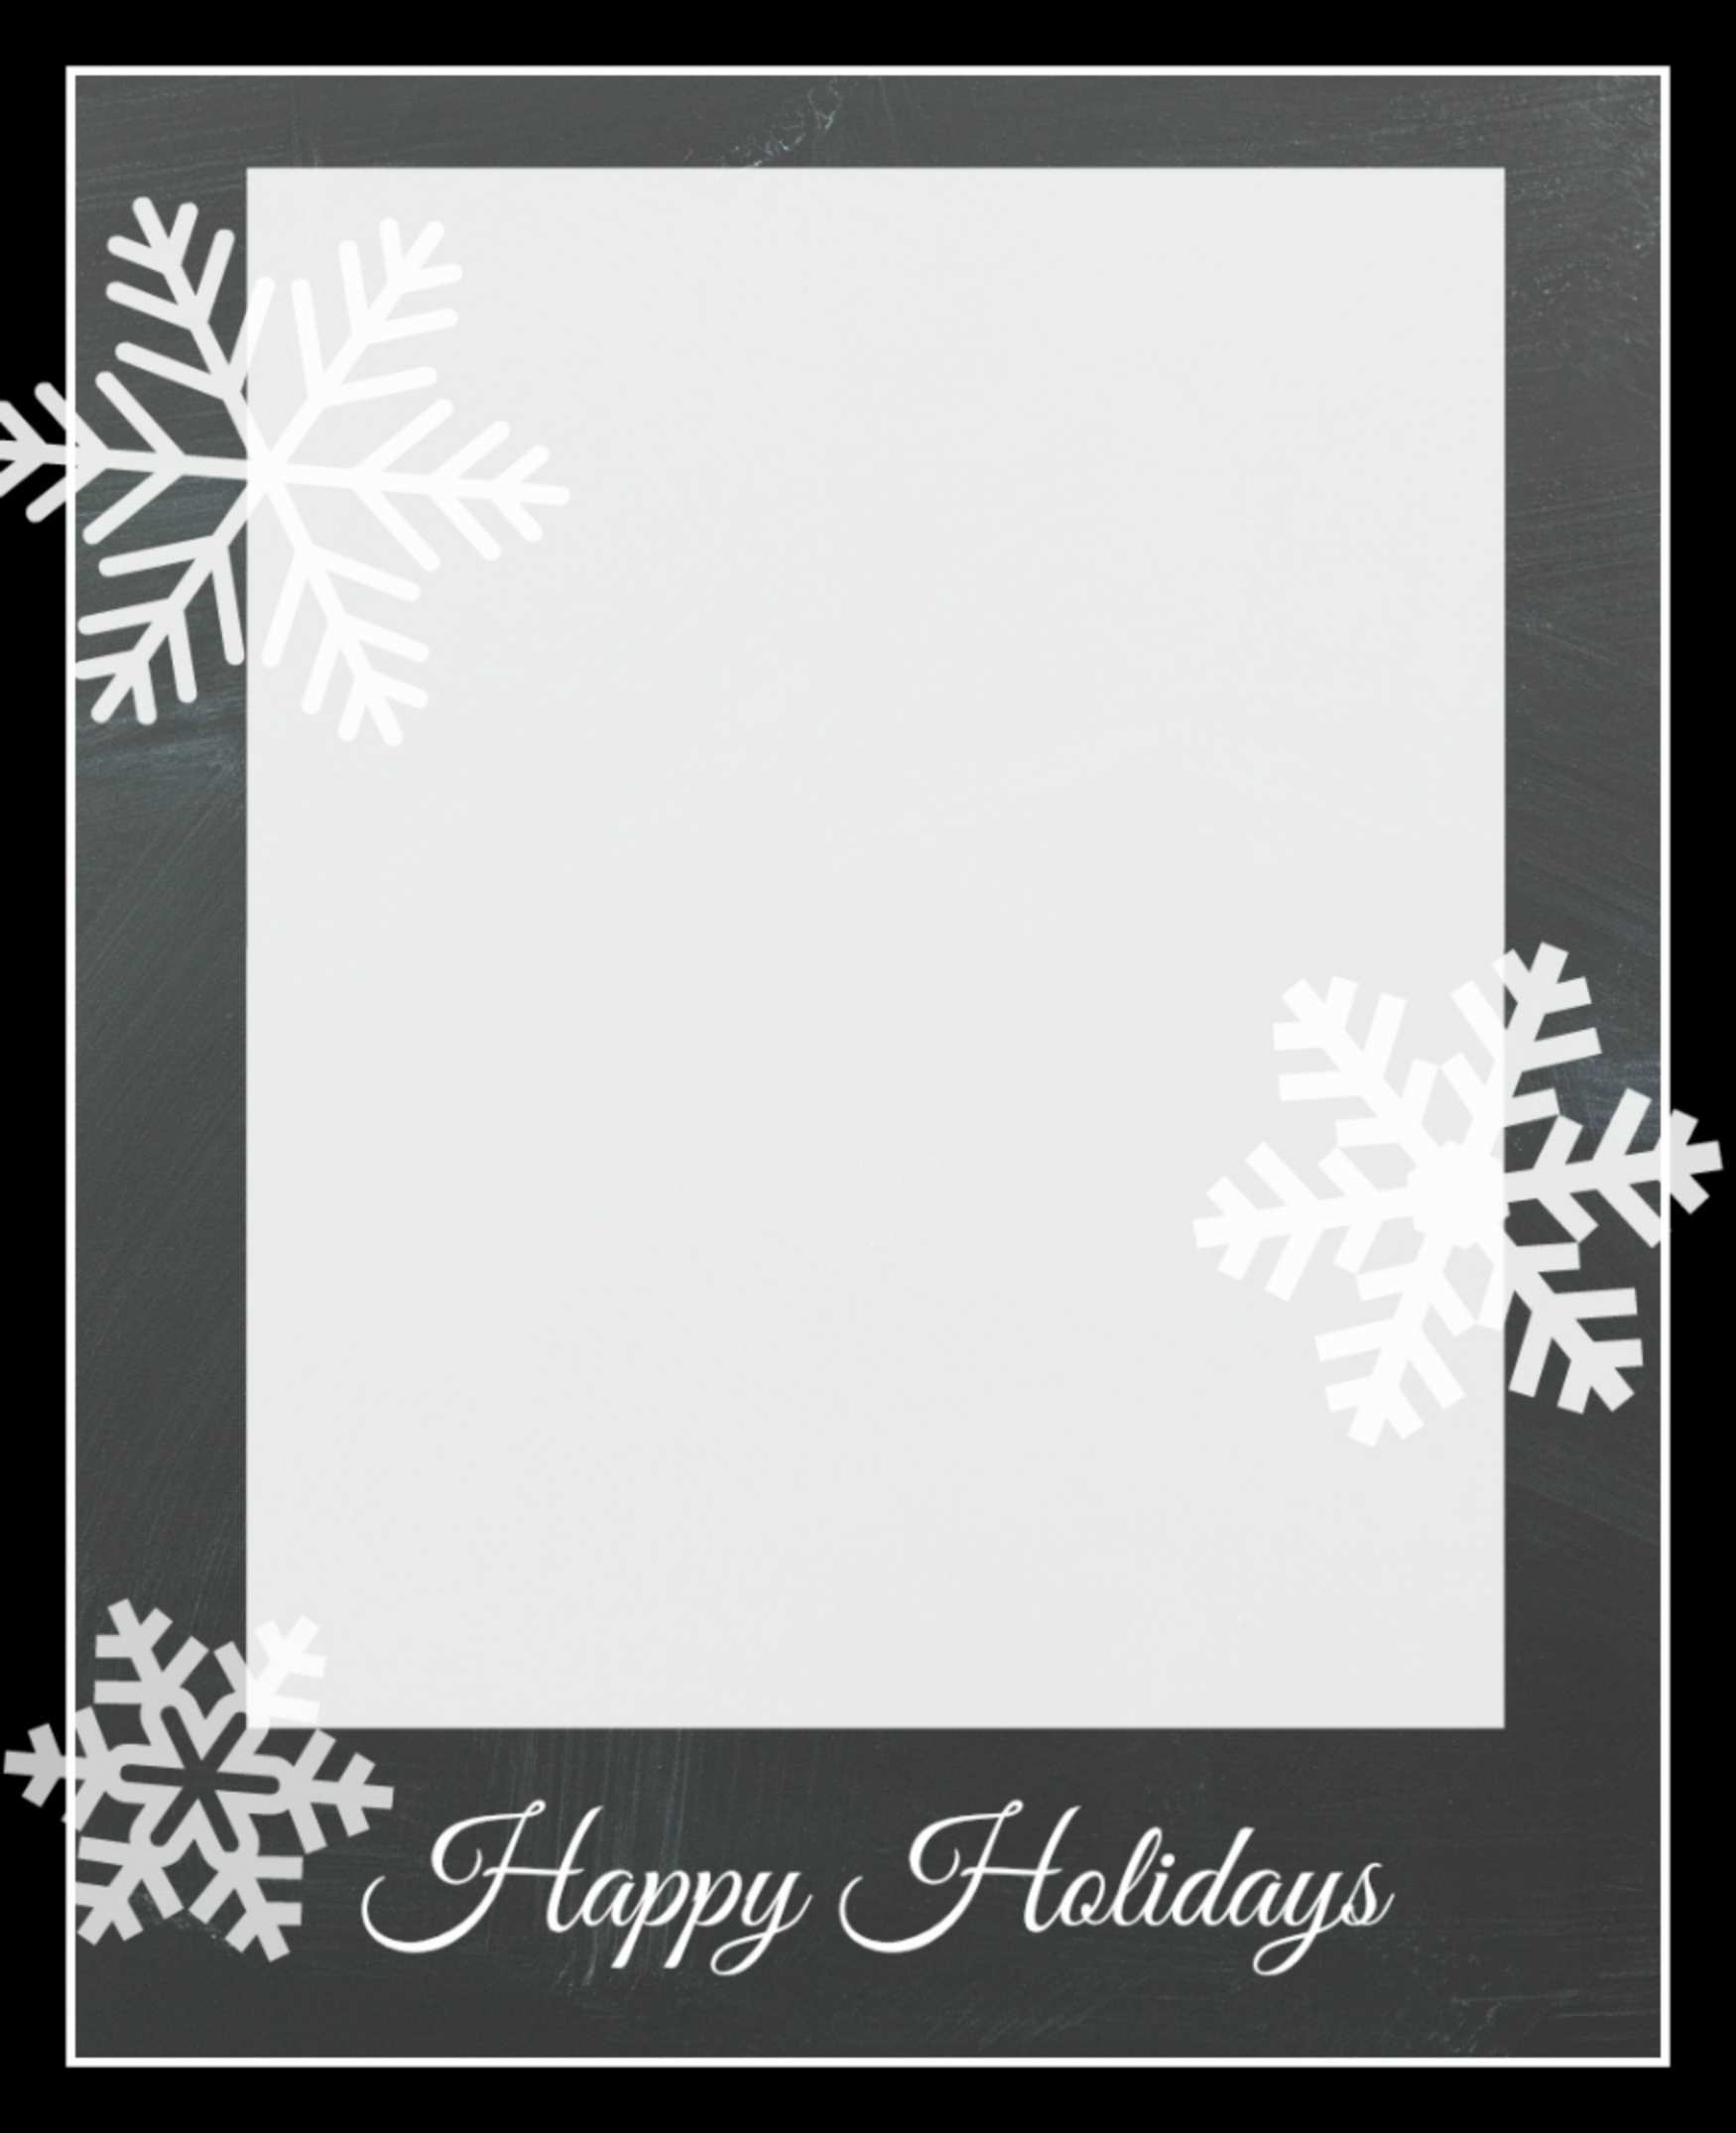 13 Blank Christmas Card Ideas Templates in Word by Christmas Card Ideas Templates